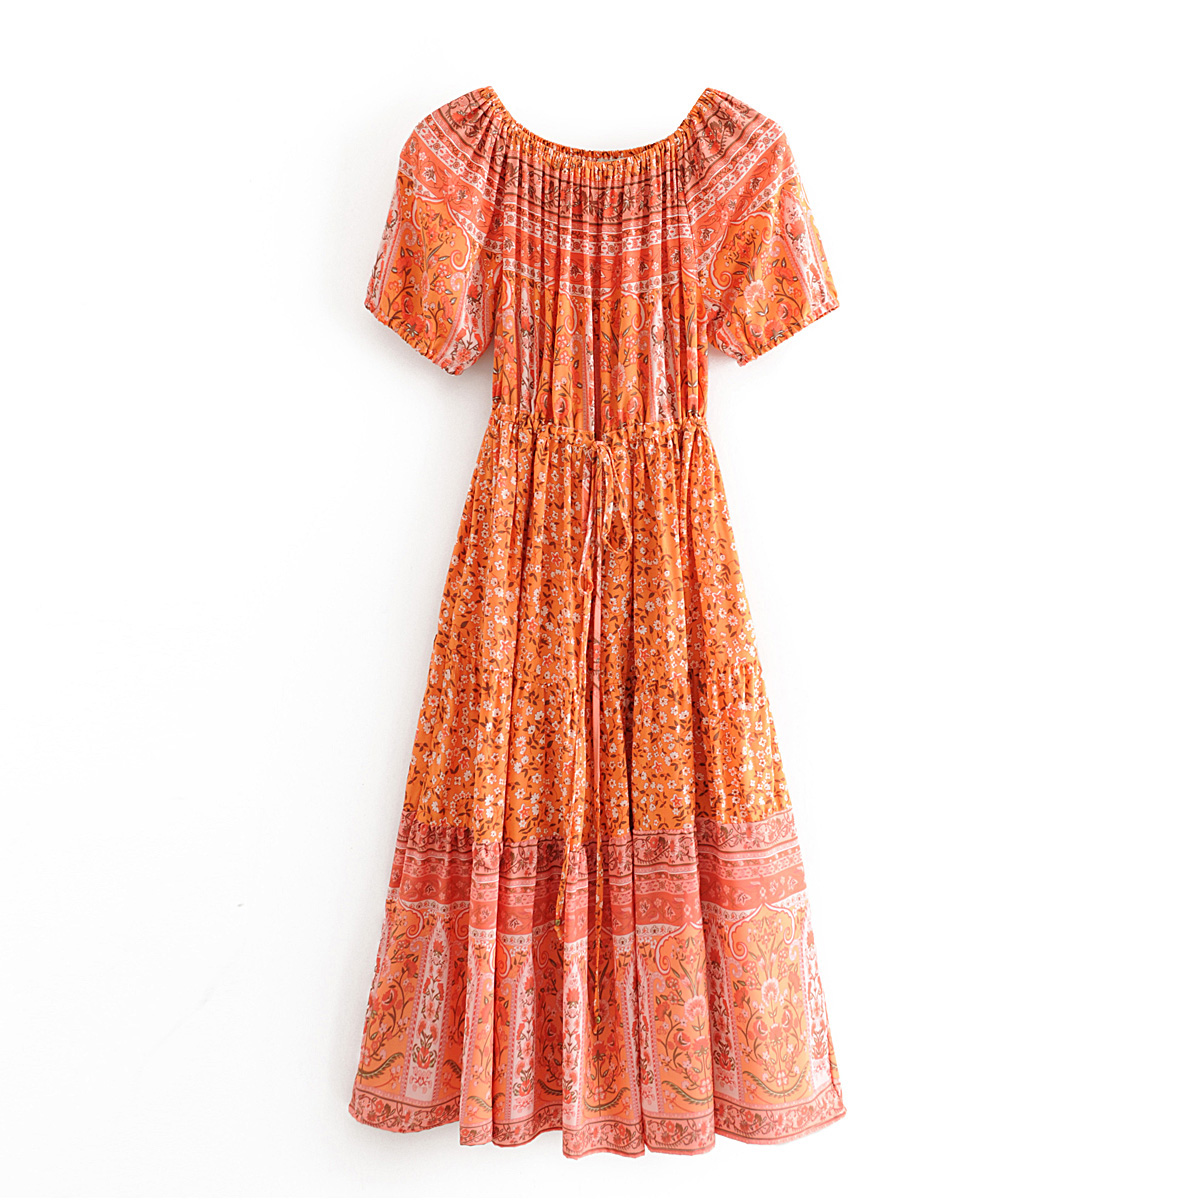 510801995407 - Summer floral dress